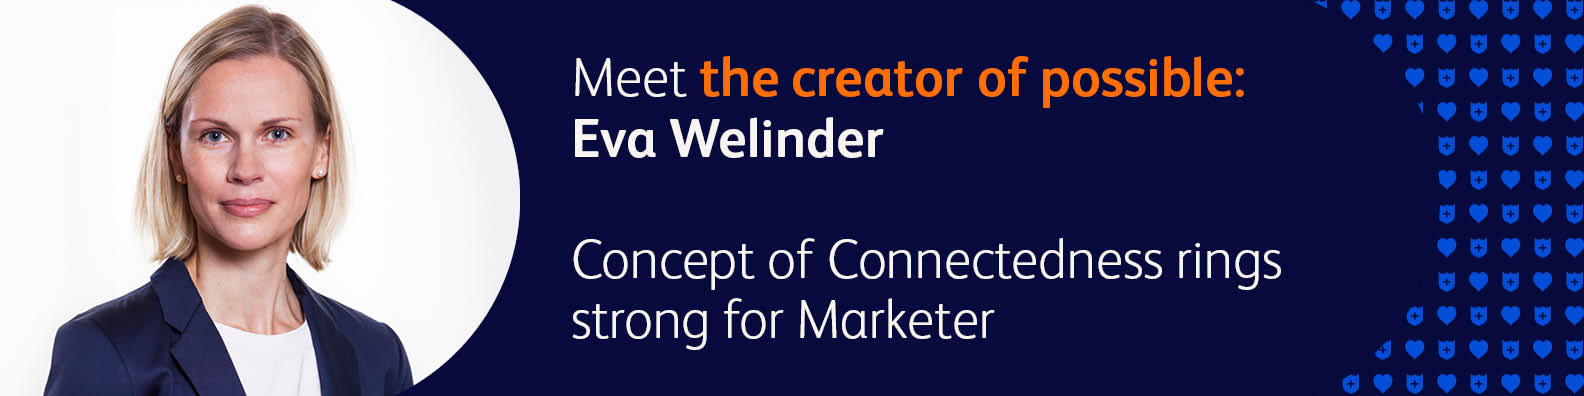 Eva Welinder, the BD Biosciences Marketing Manager for the Nordic Region,